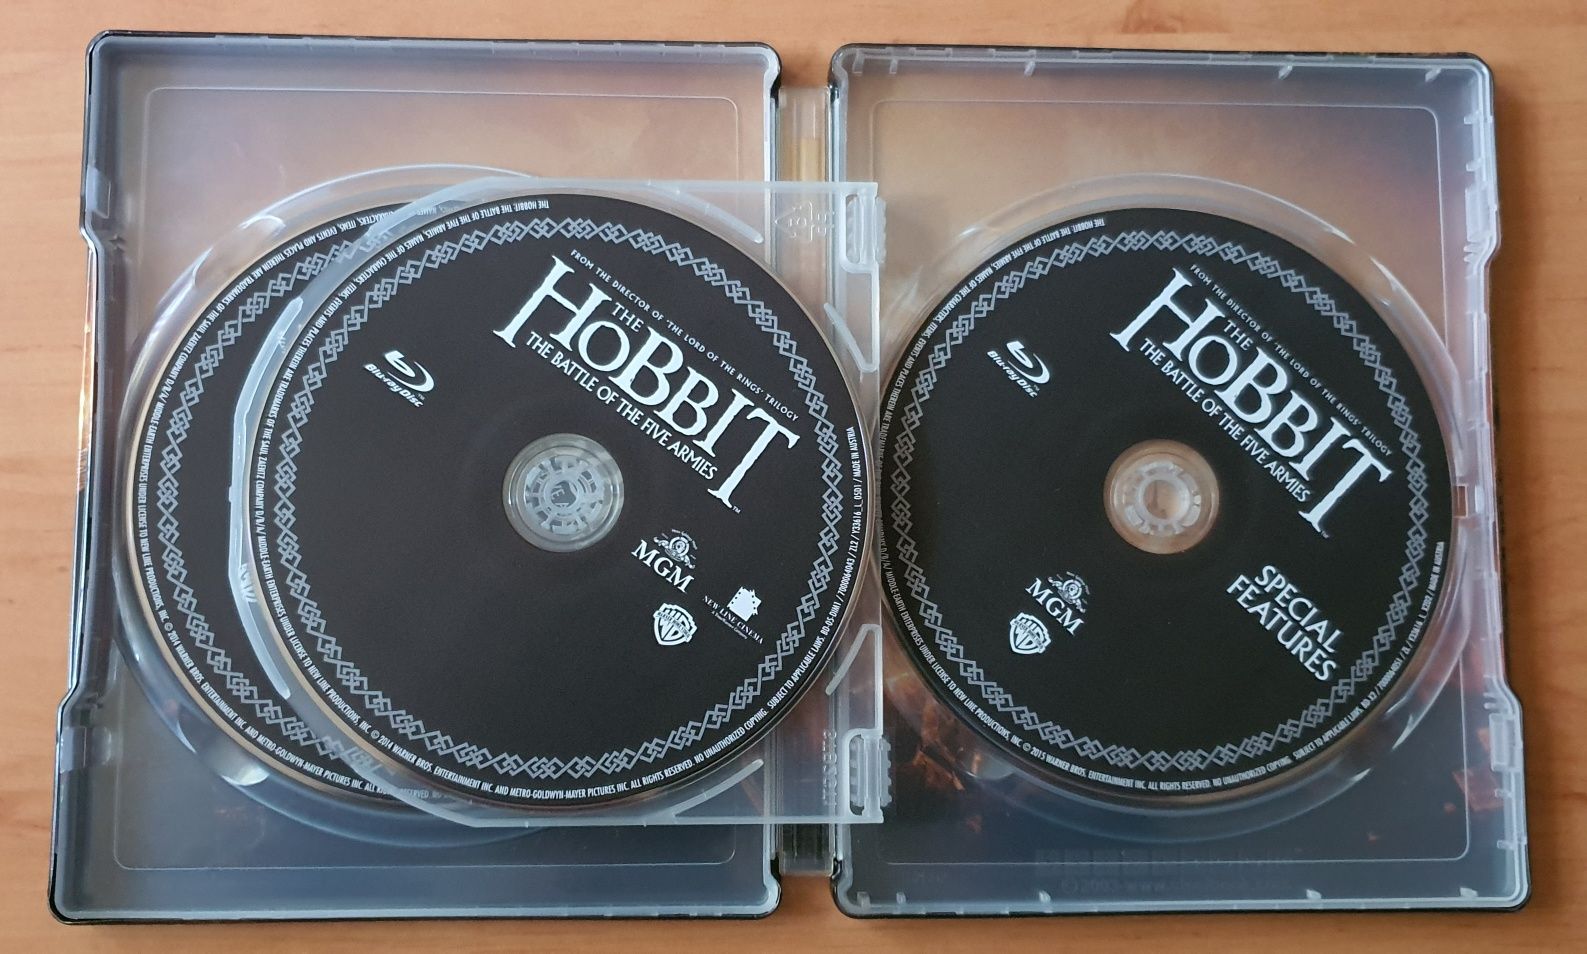 Hobbit-The Battle of the five armies blueray 3D steelbok